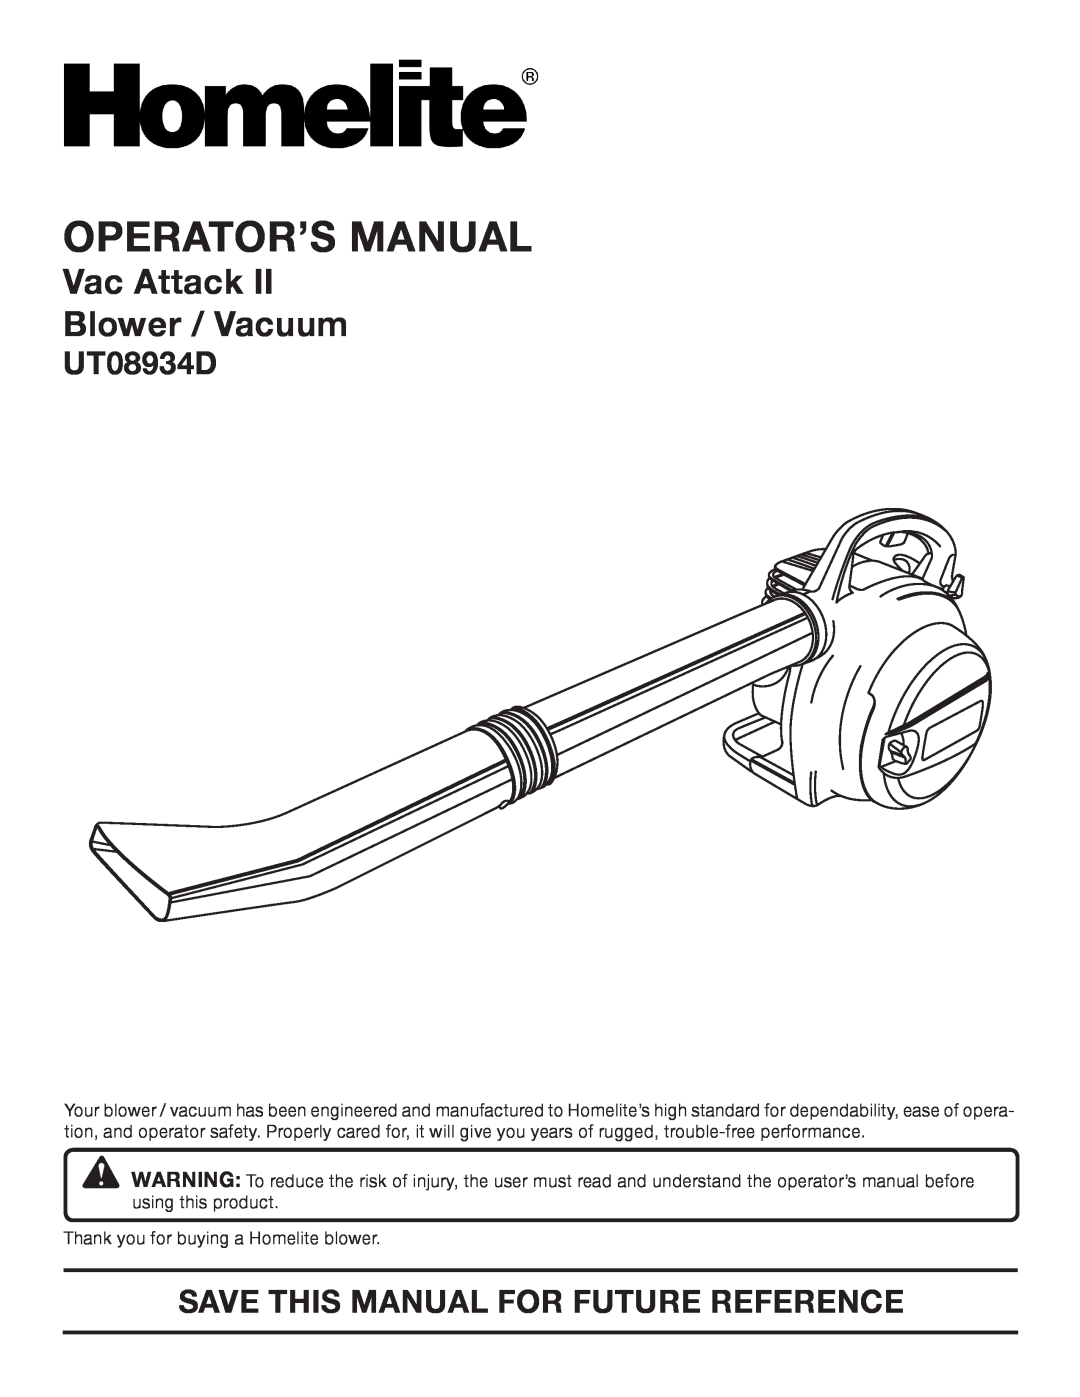 Homelite UT08934D manual Operator’S Manual, Vac Attack Blower / Vacuum, Save This Manual For Future Reference 